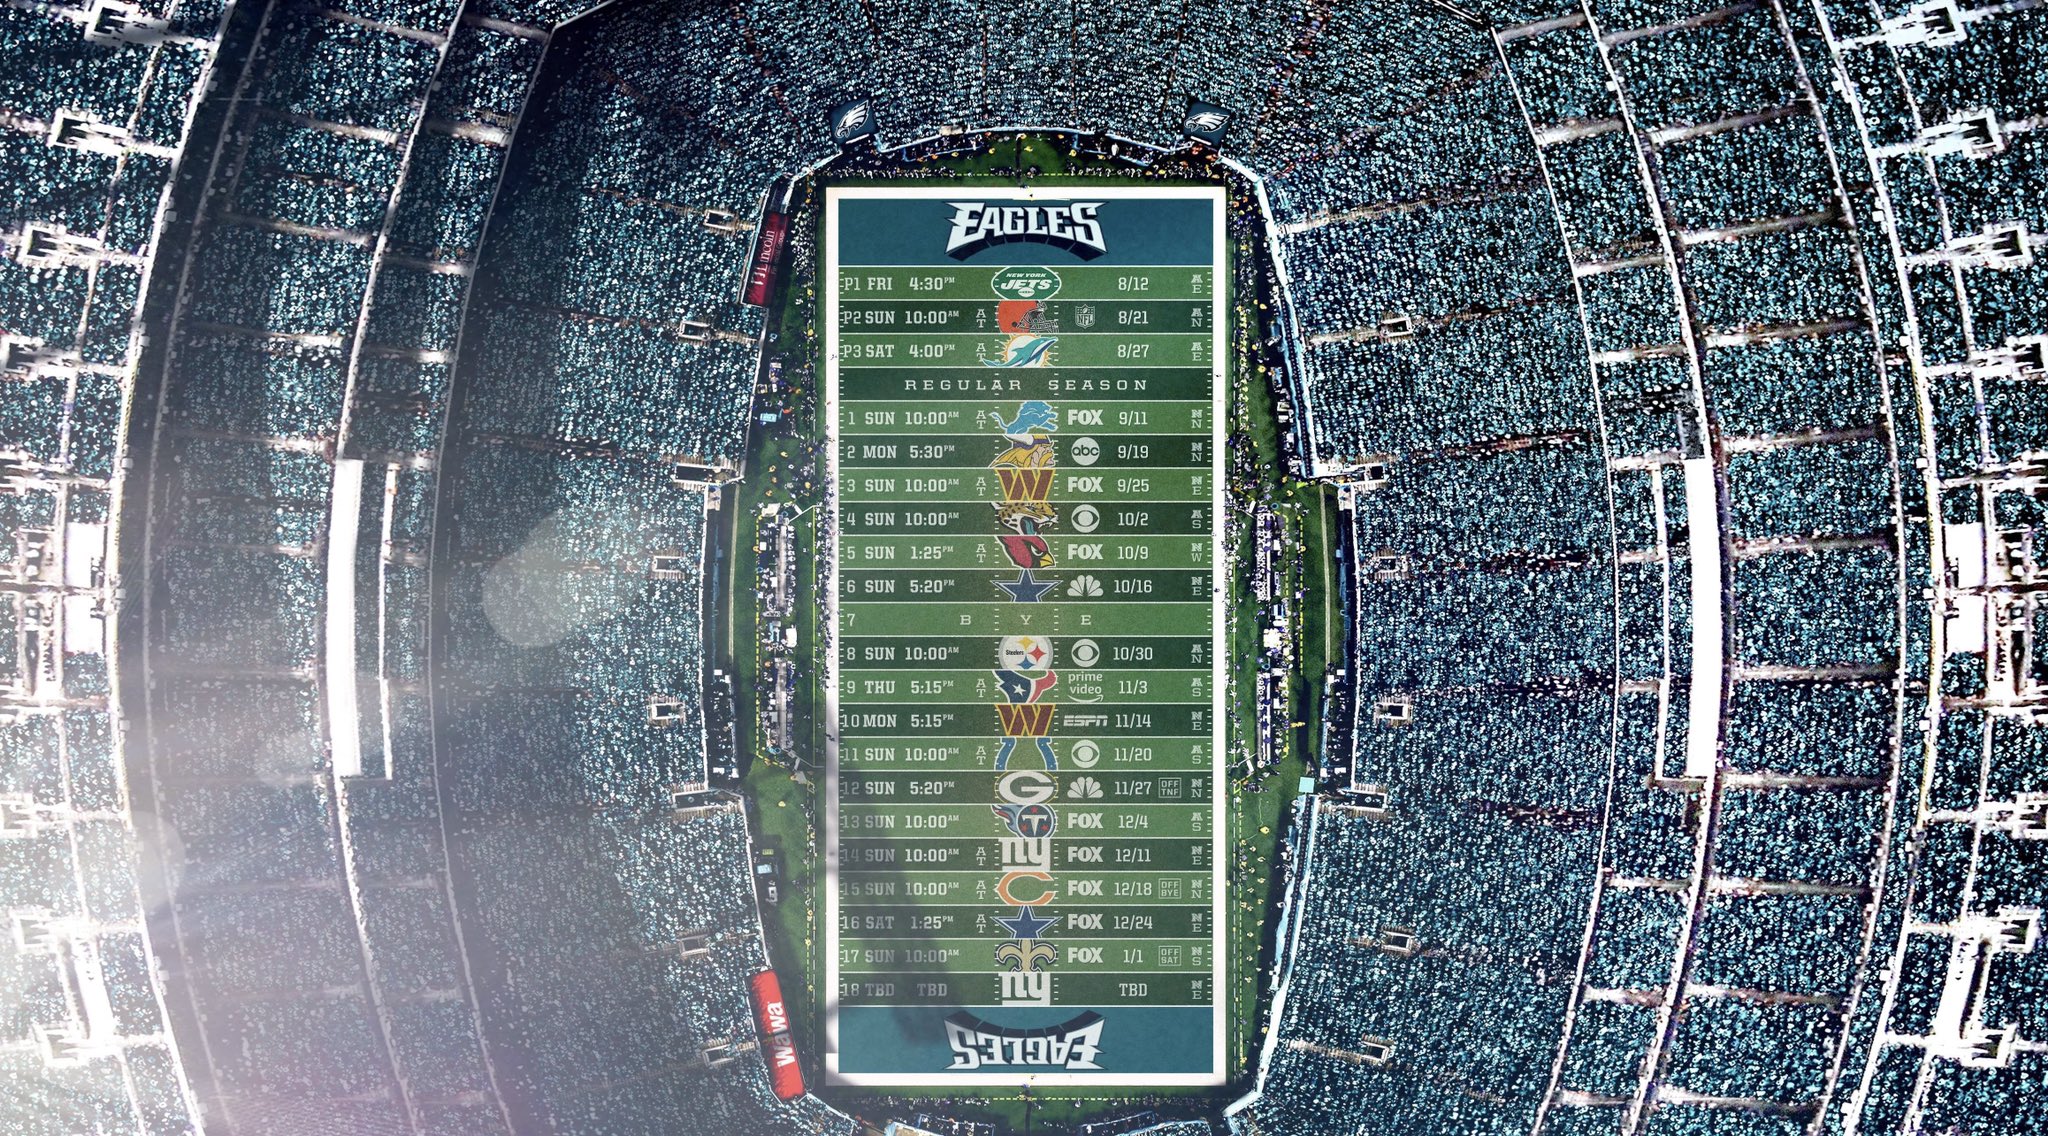 2022 Eagles Schedule: Downloadable wallpaper